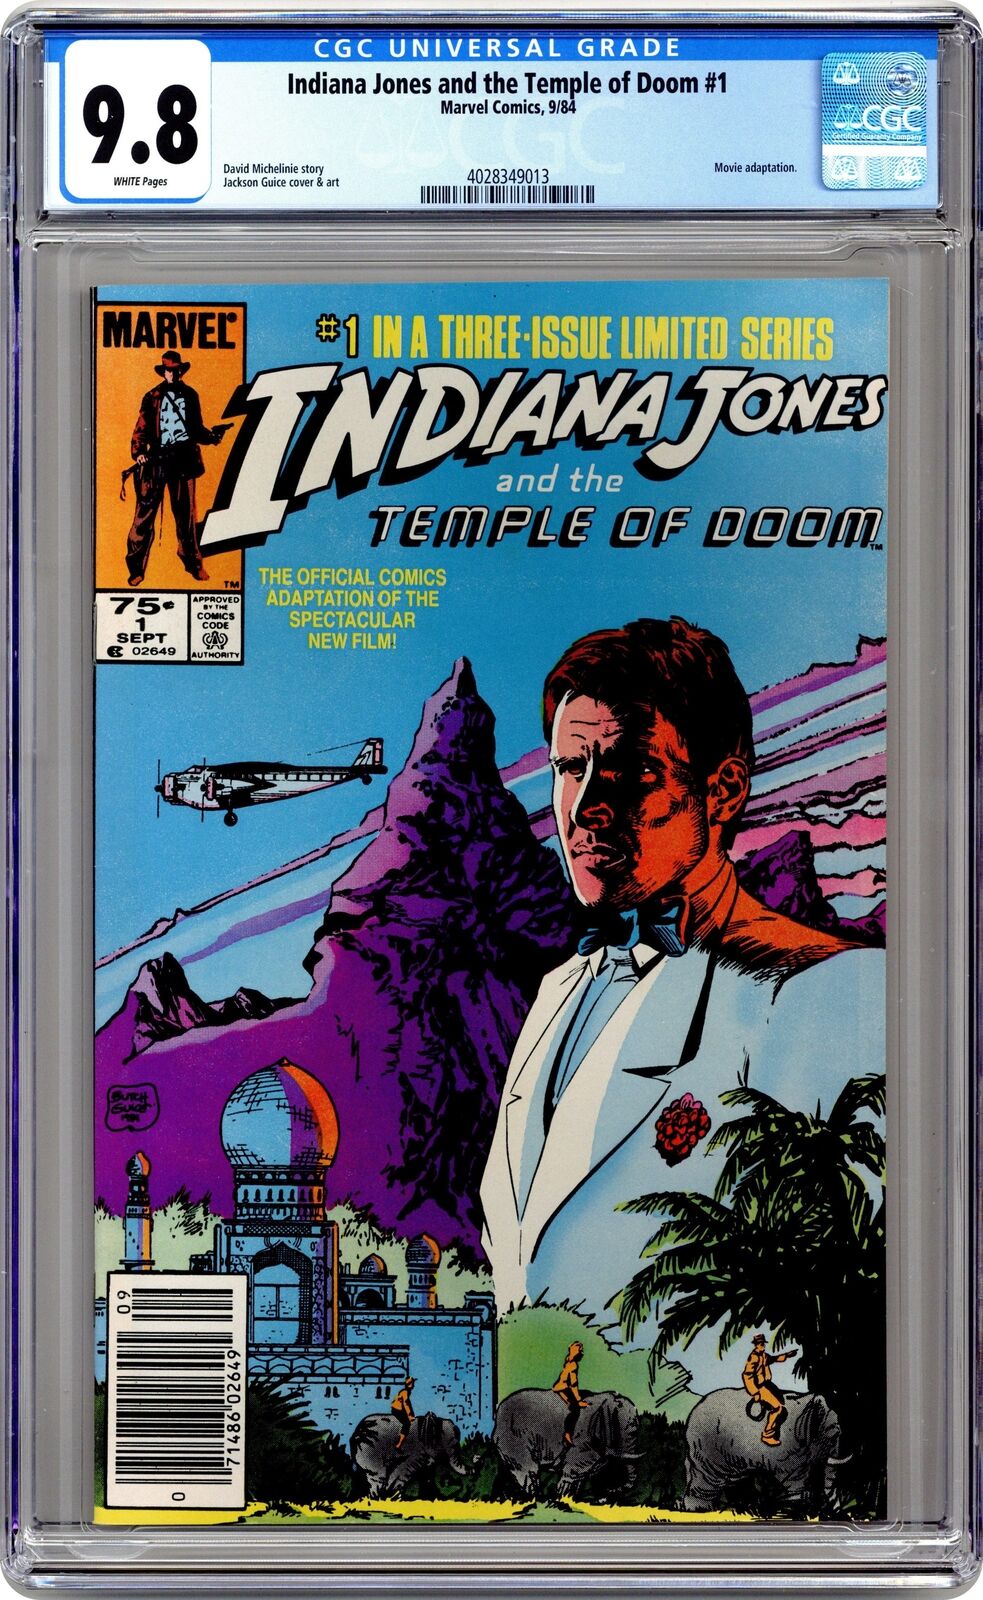 Indiana Jones and the Temple of Doom Movie Adaptation #1 CGC 9.8 1984 4028349013